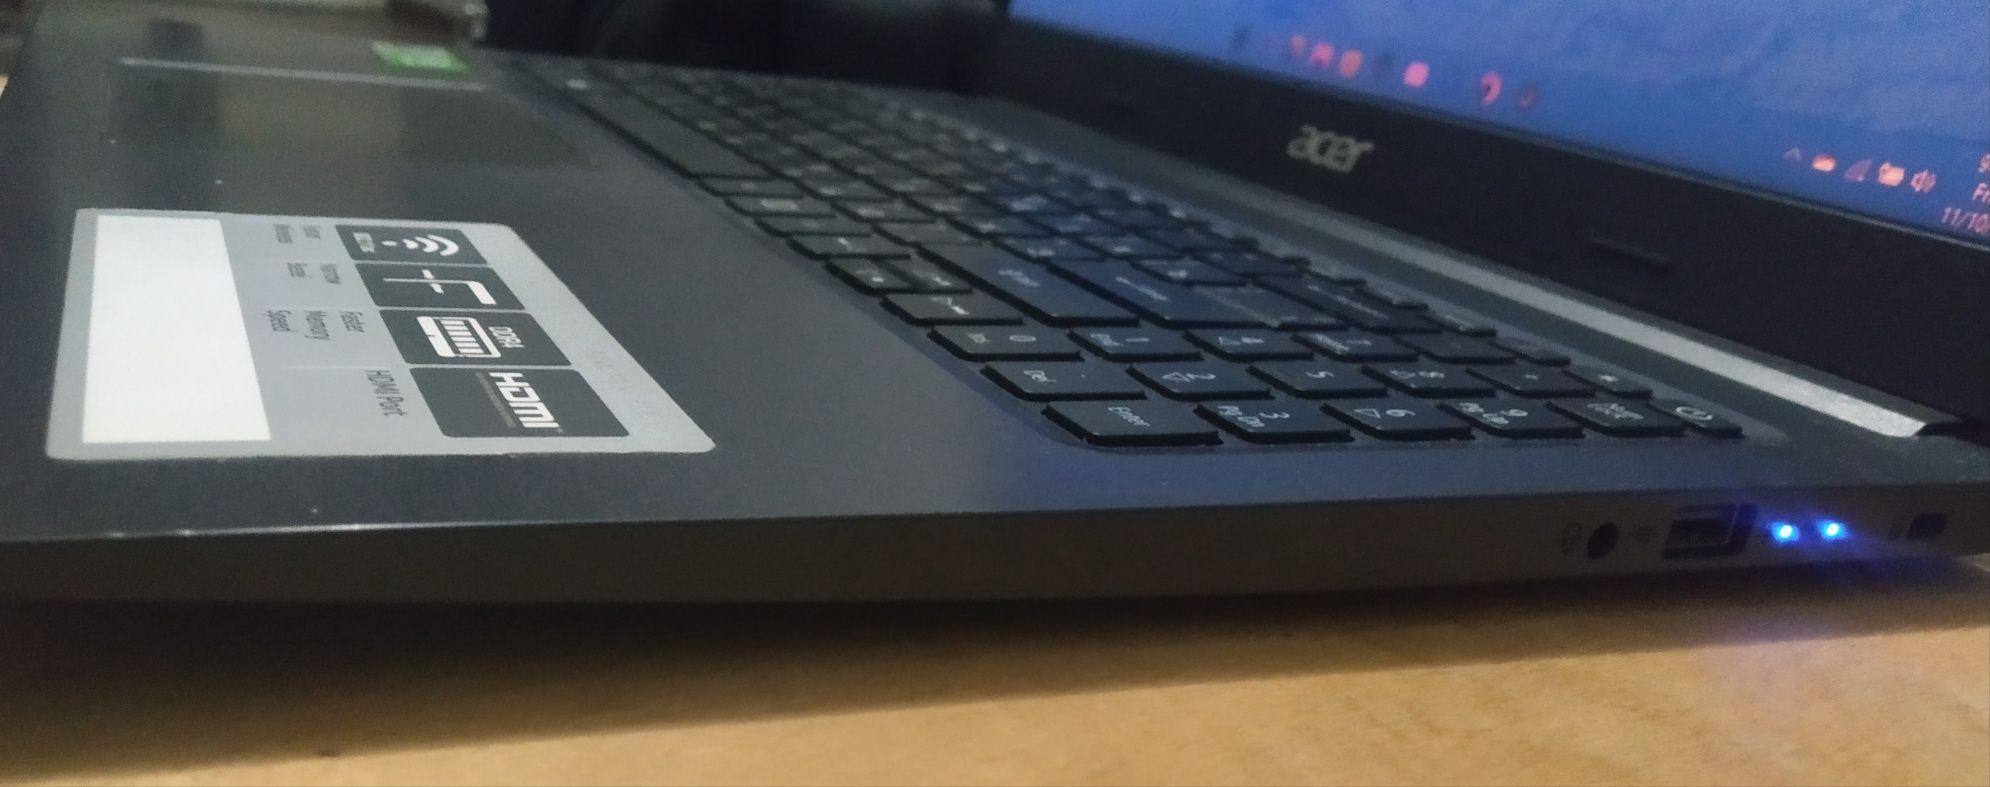 Noutbuk Acer core 5 dasturchilar uchun